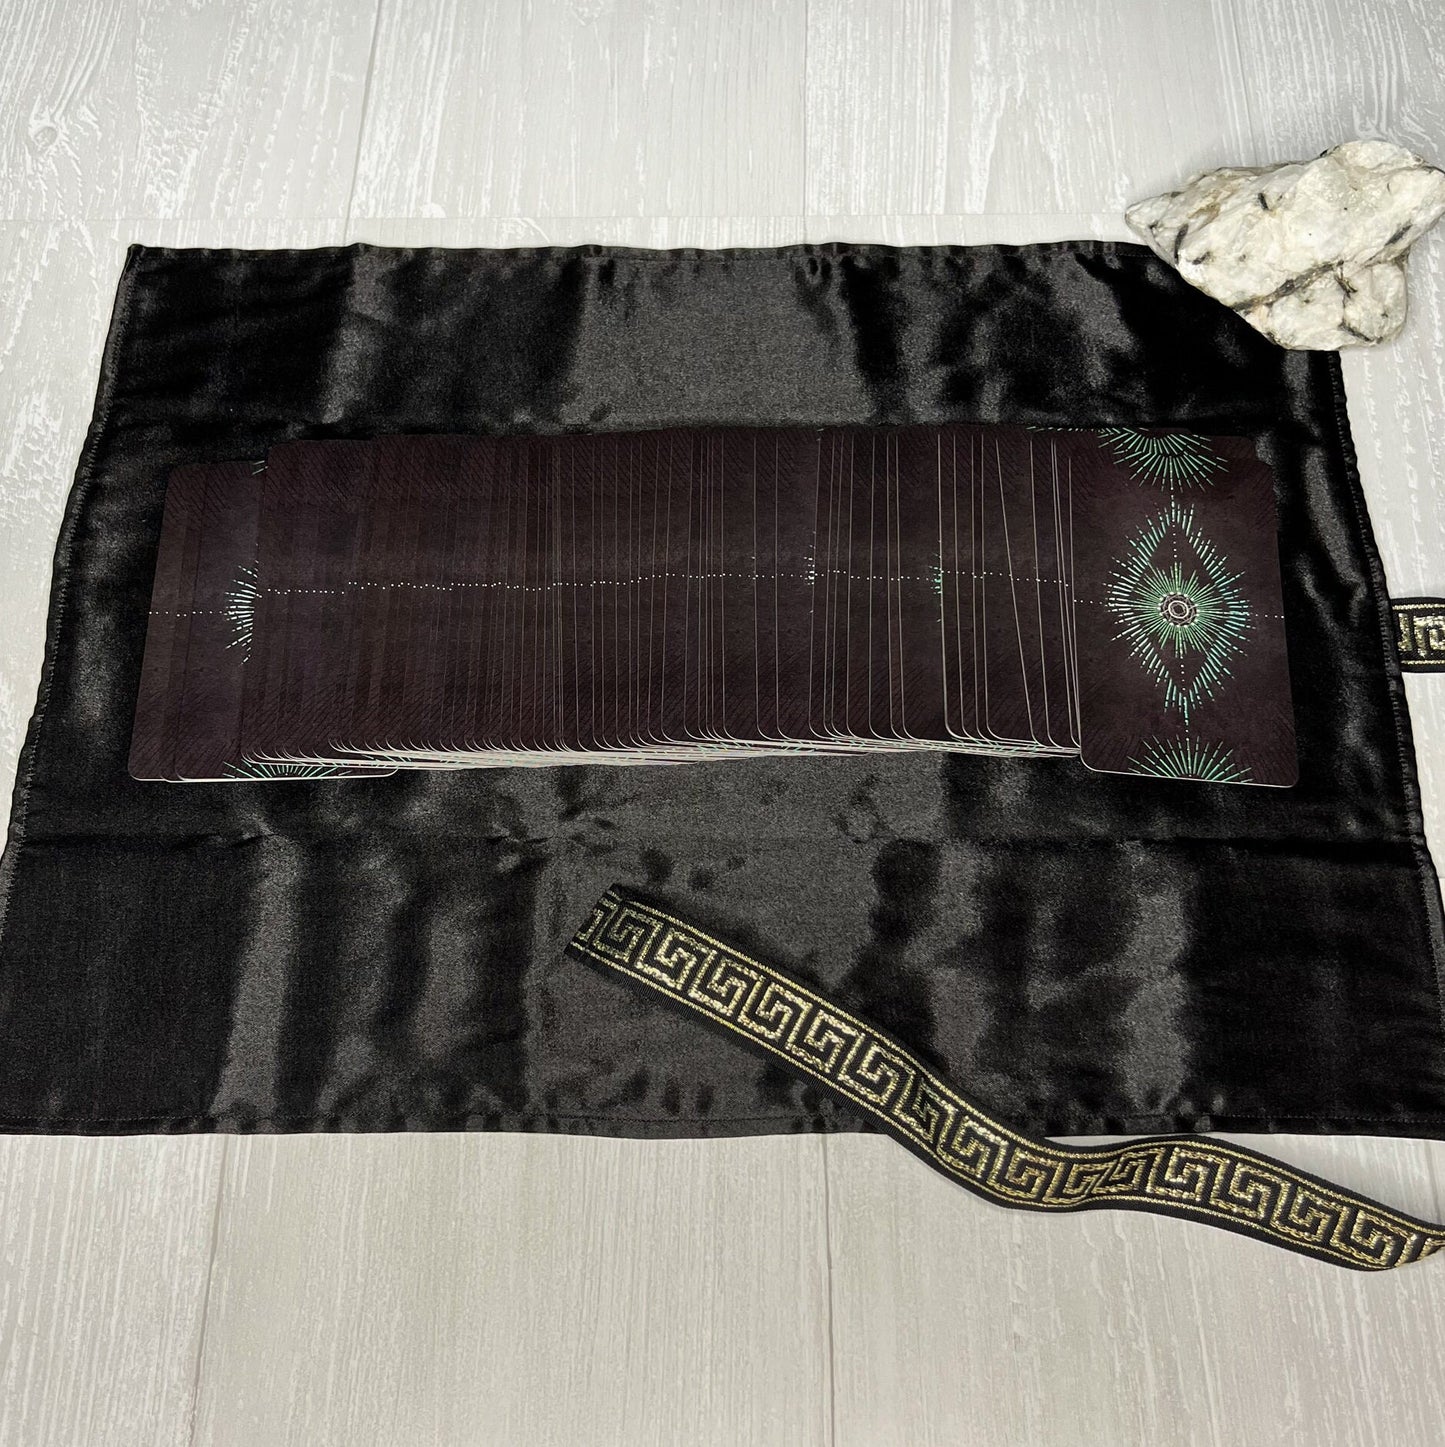 Black & Gold Satin Tarot Wrap, Tarot Deck Storage and Cloth, Tarot Card Holder, Pagan Witchcraft Wiccan Divination Supplies Accessories